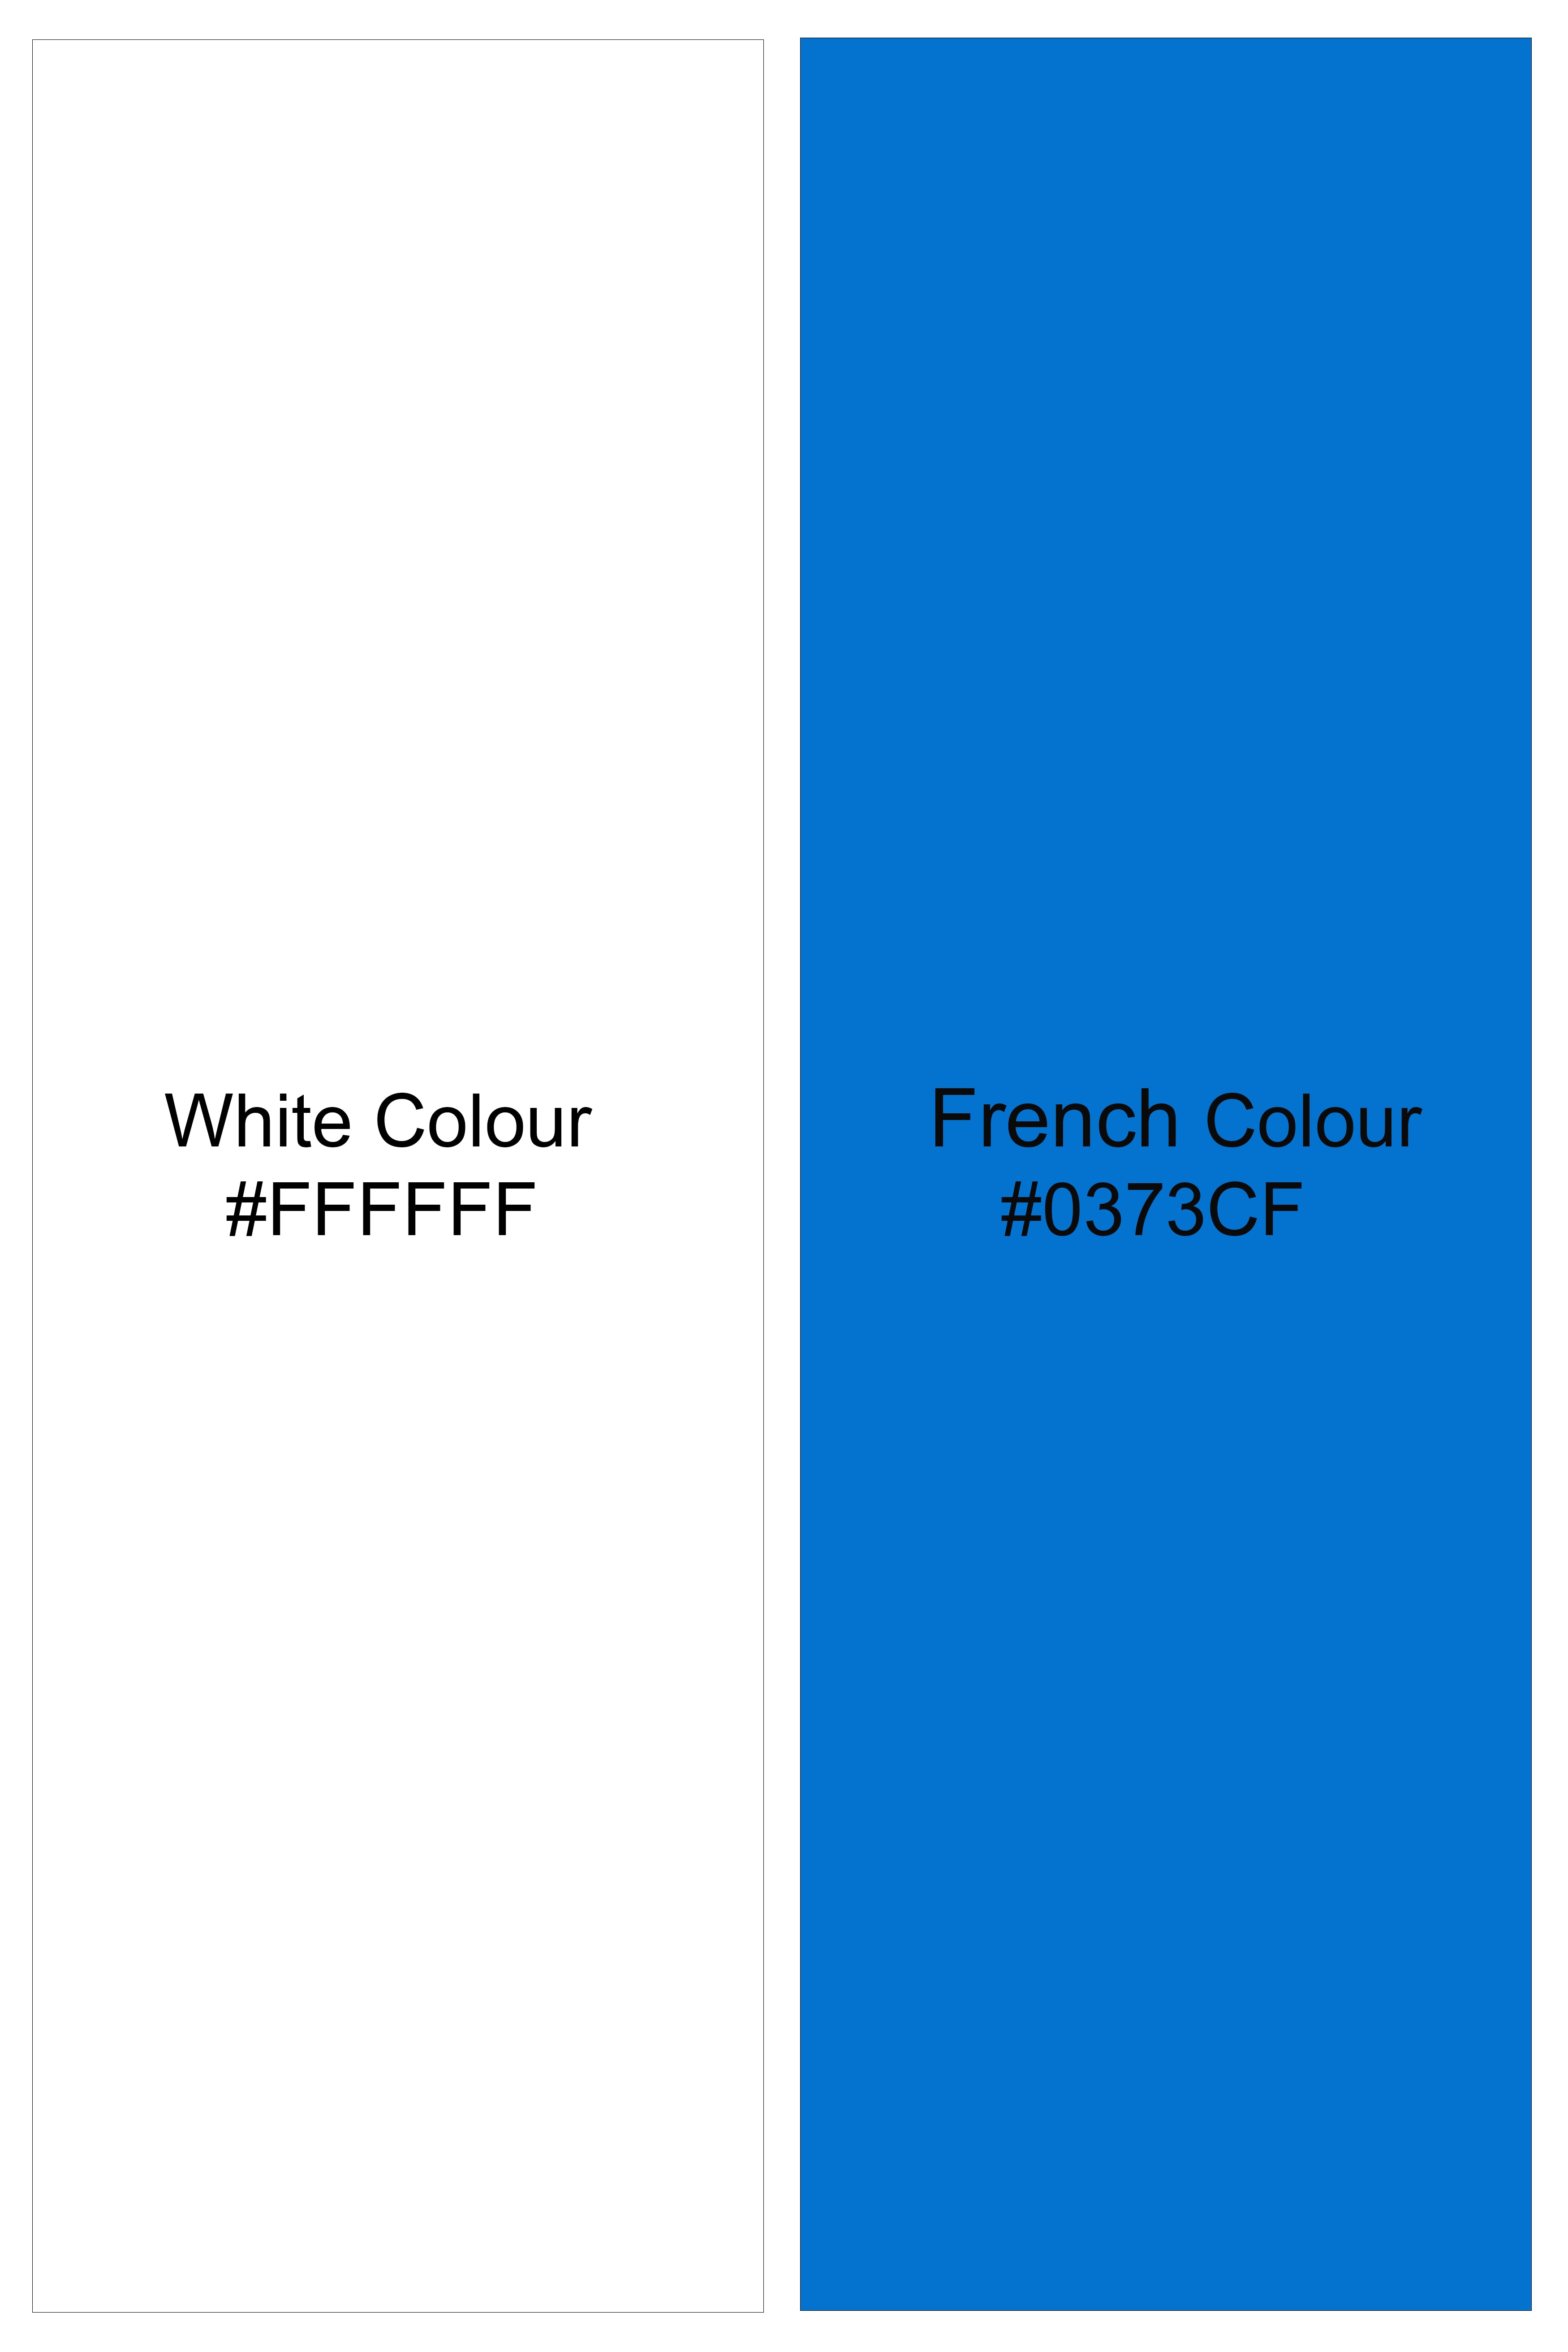 Bright White with French Blue Printed Herringbone Shirt